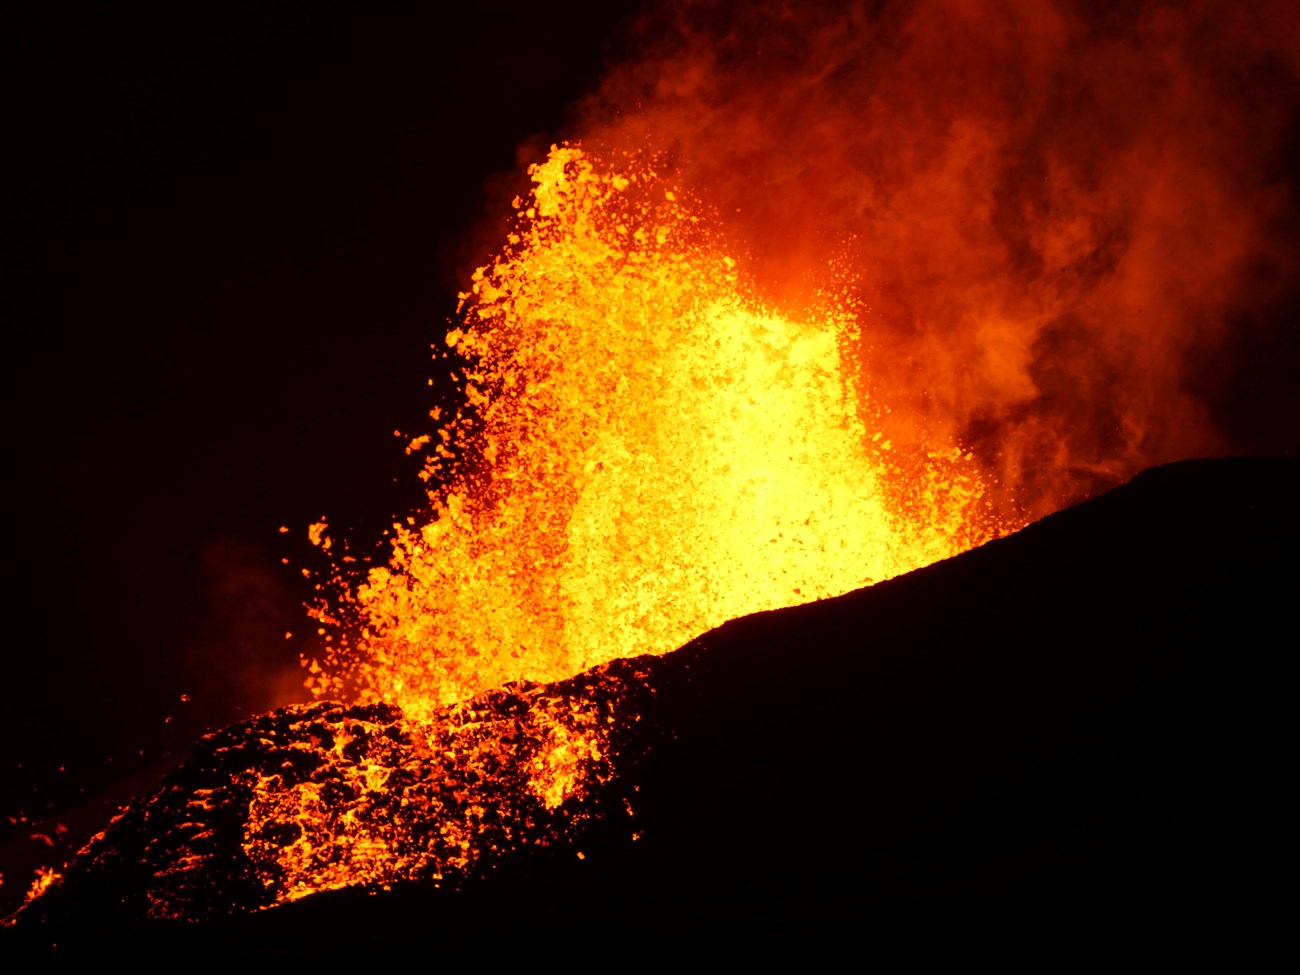 volcanic eruption with molten lava erupting into a dark night sky